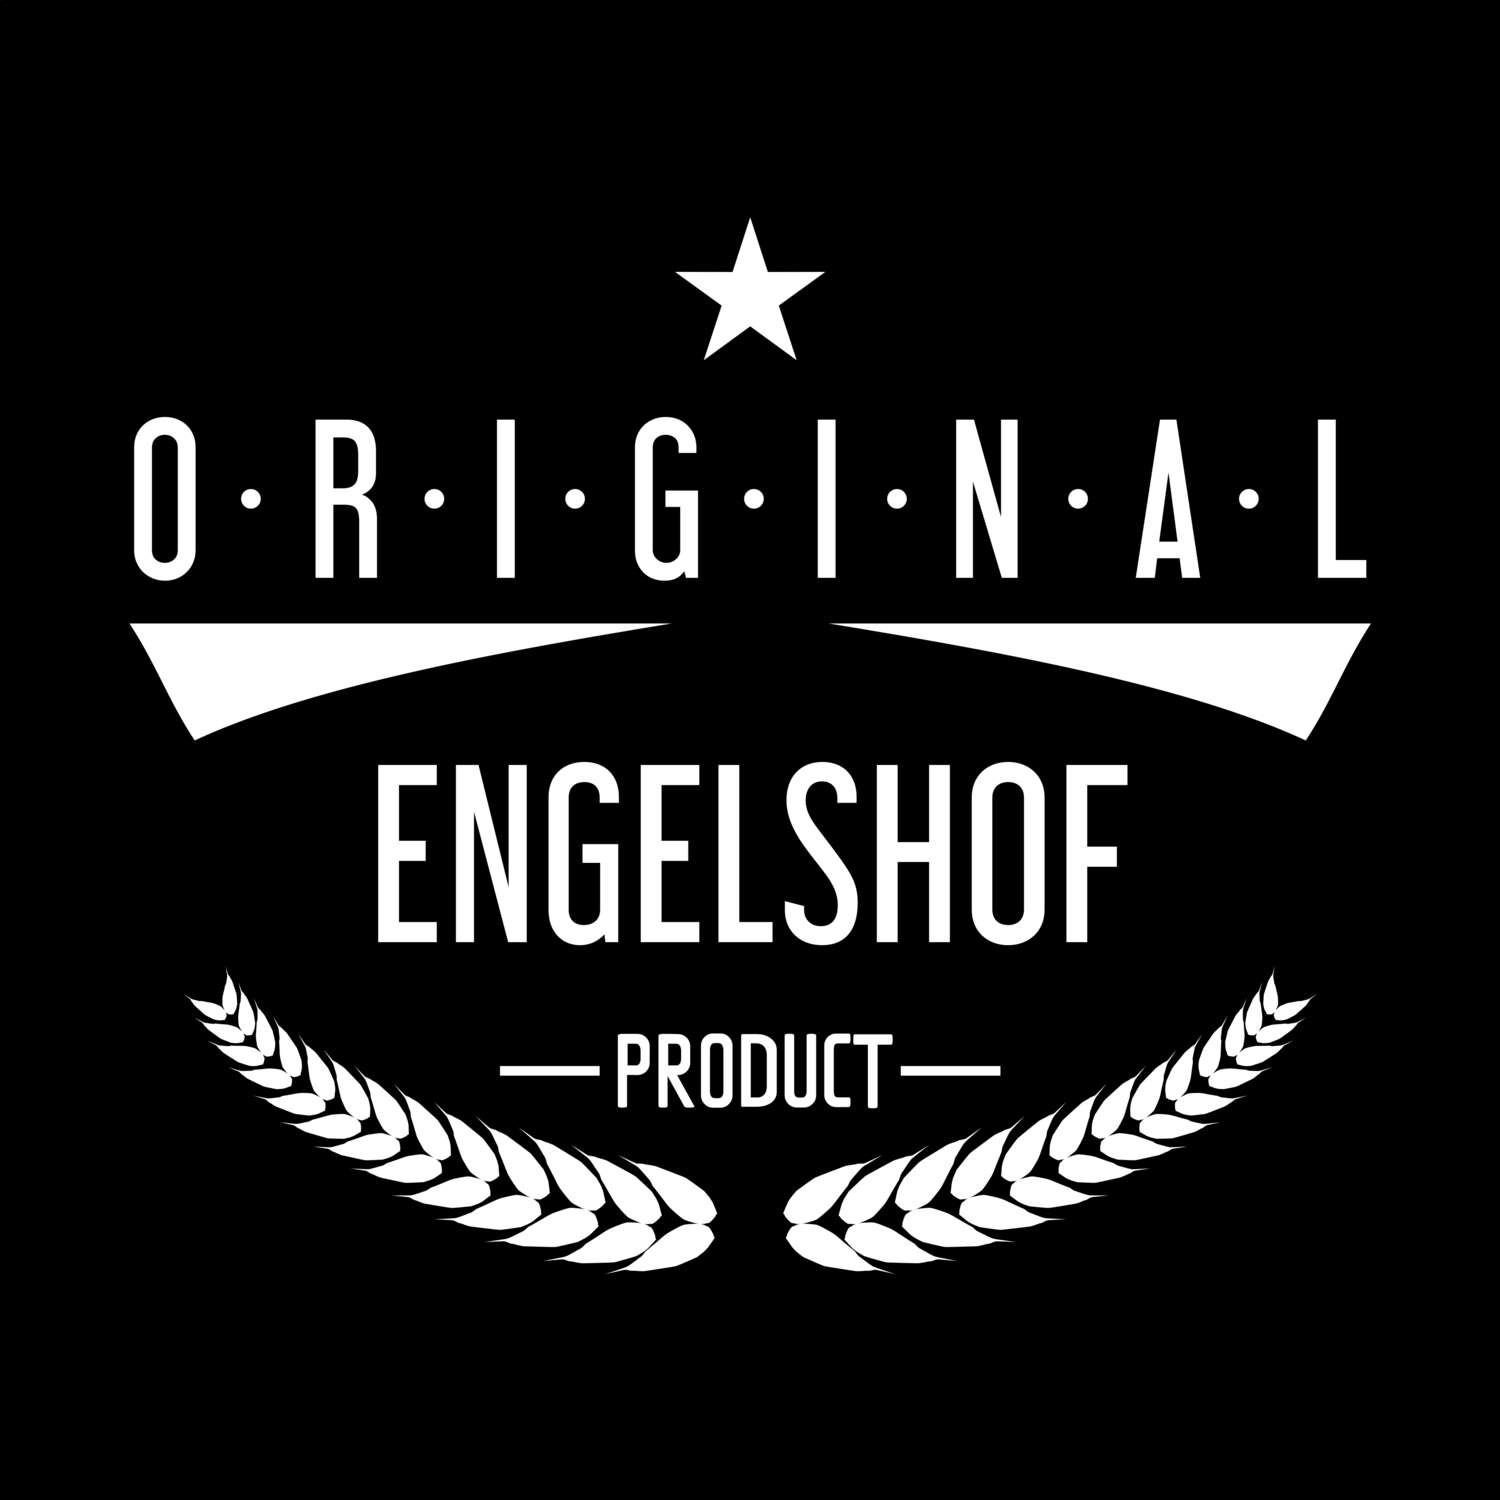 Engelshof T-Shirt »Original Product«